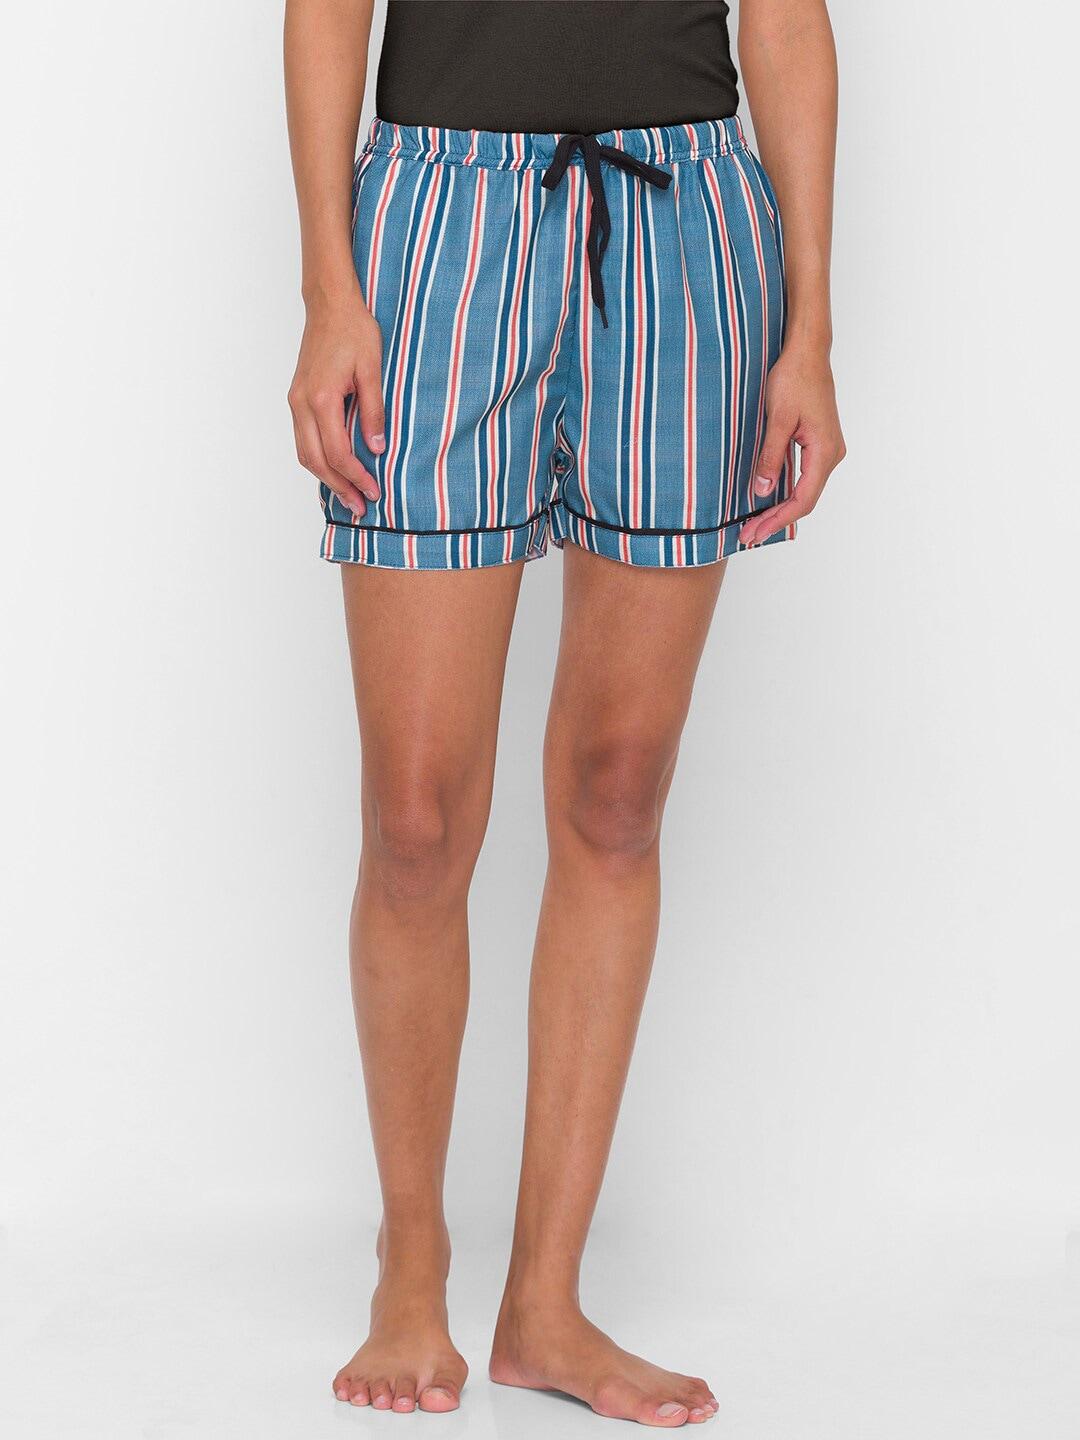 fashionrack-women-navy-blue-&-pink-striped-cotton-lounge-shorts